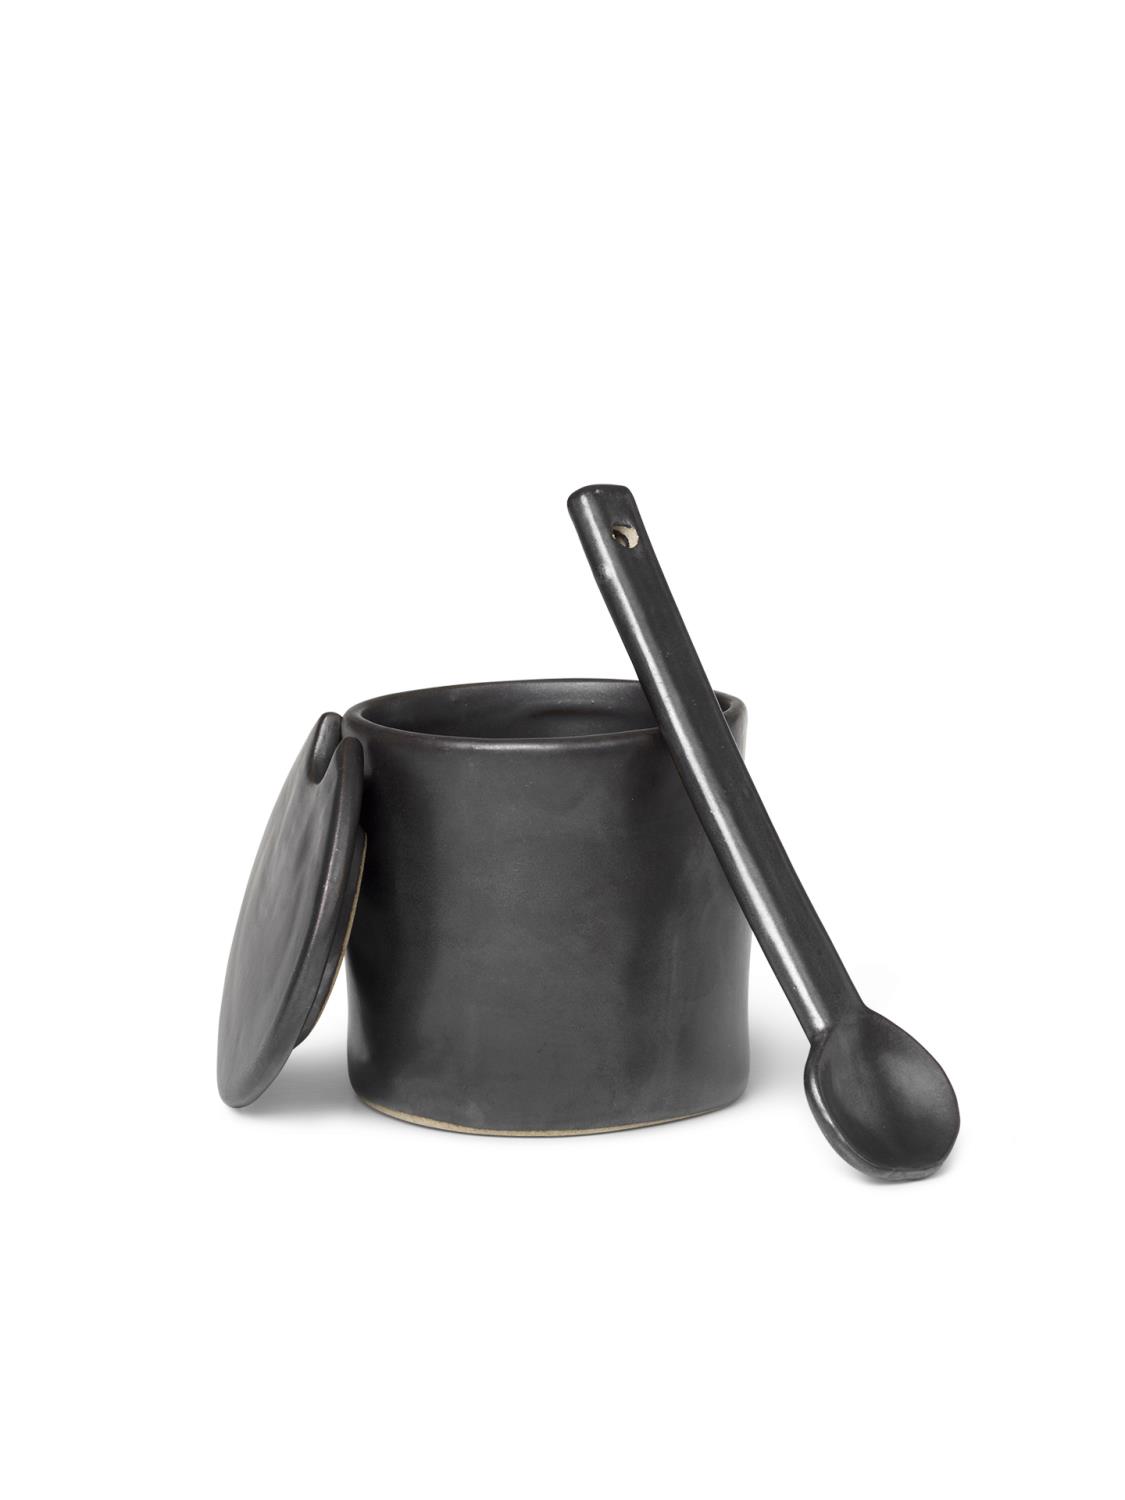 Ferm Living - Flow Jar with Spoon - Black